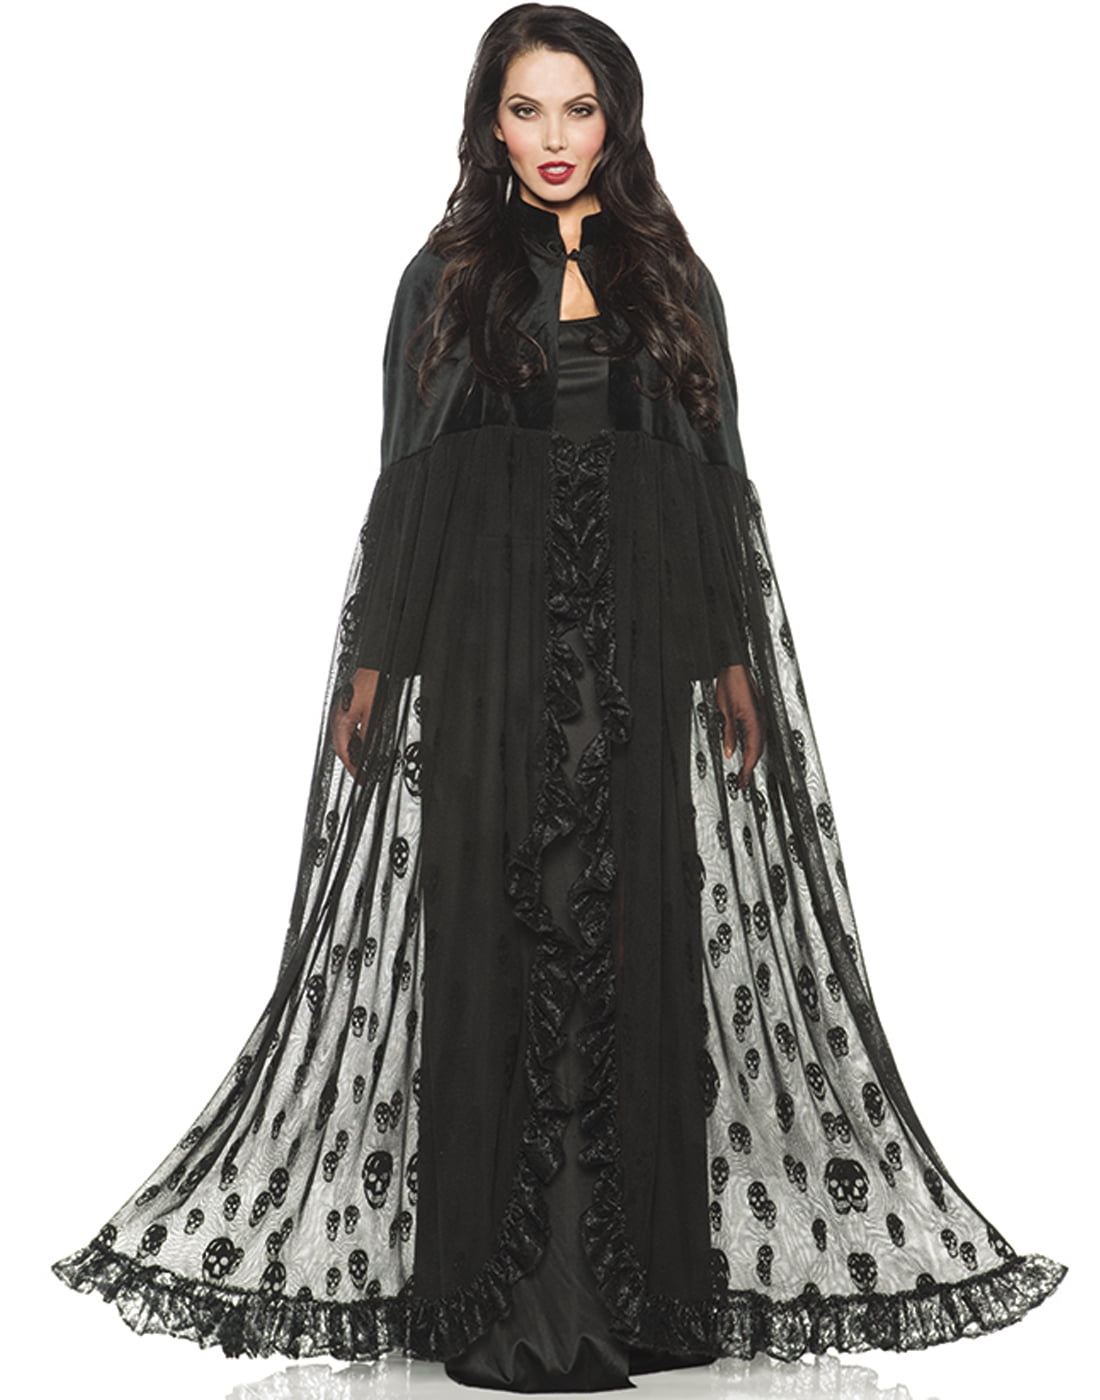 Hooded Velvet Halloween Cloak Cape Wizard Vampire Witch Wedding Gothic Medieval 